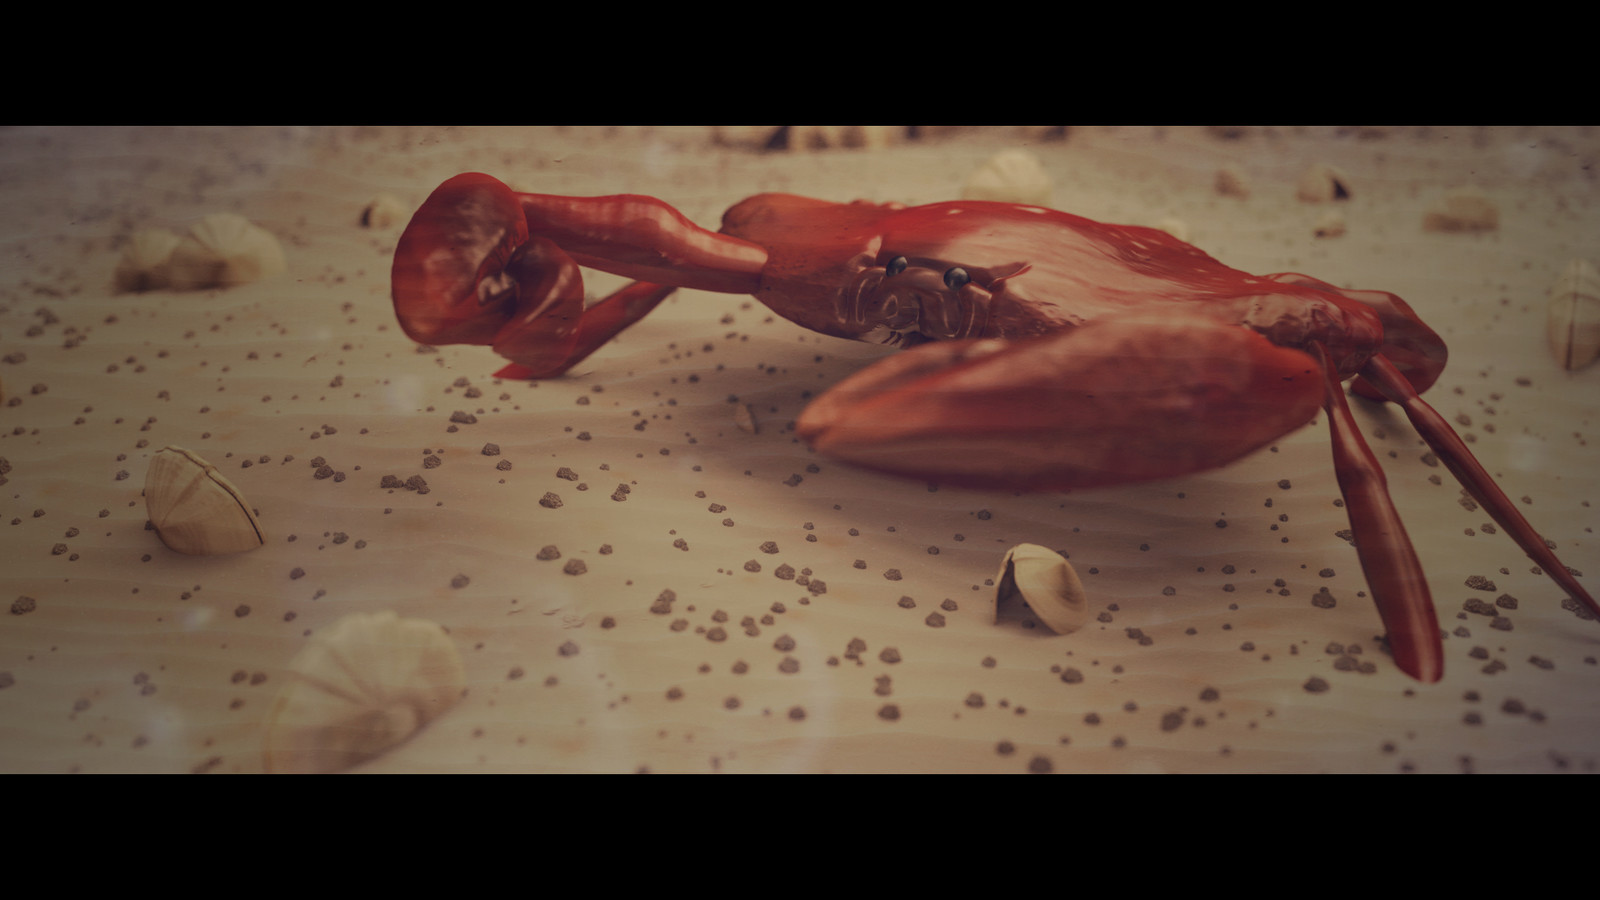 CGI CRAB - Study of the anatomy of a crab